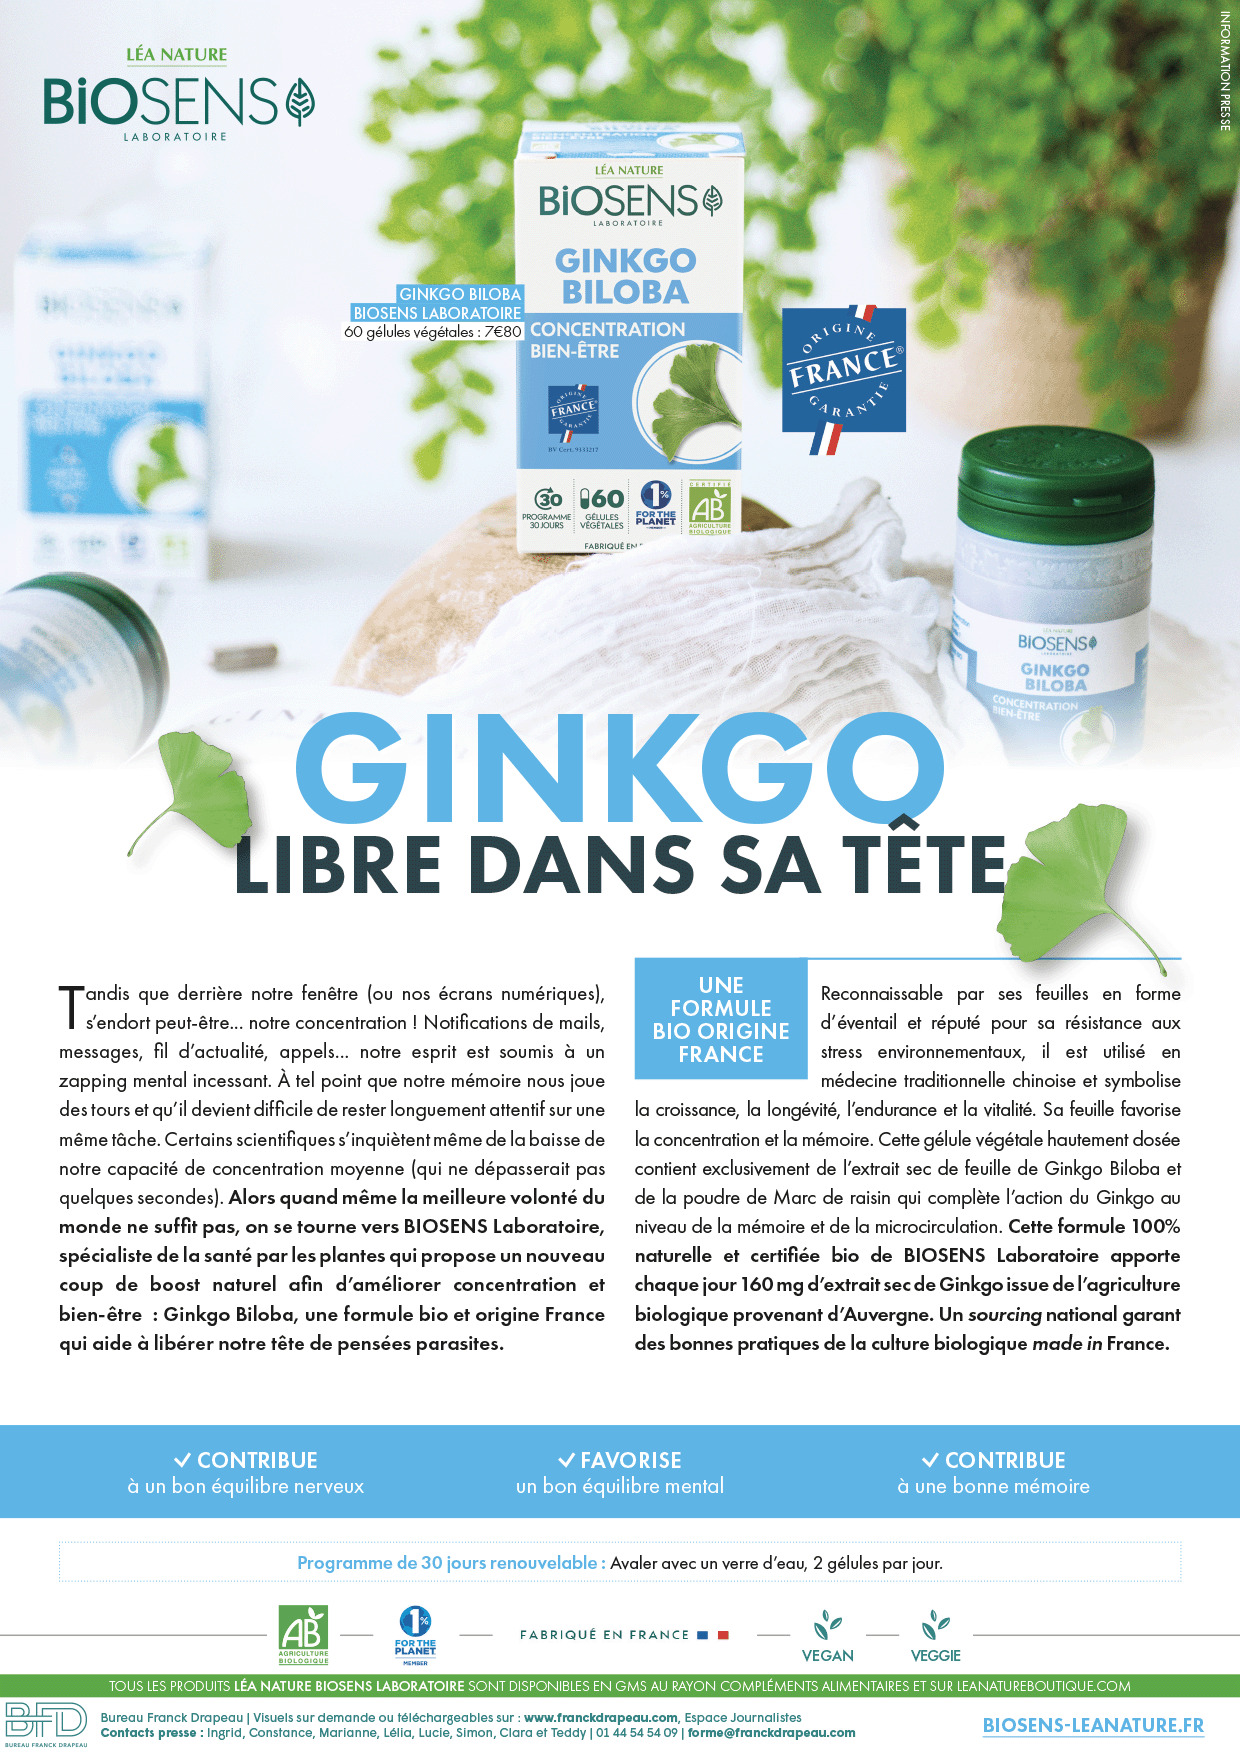 Biosens Laboratoire | Ginkgo